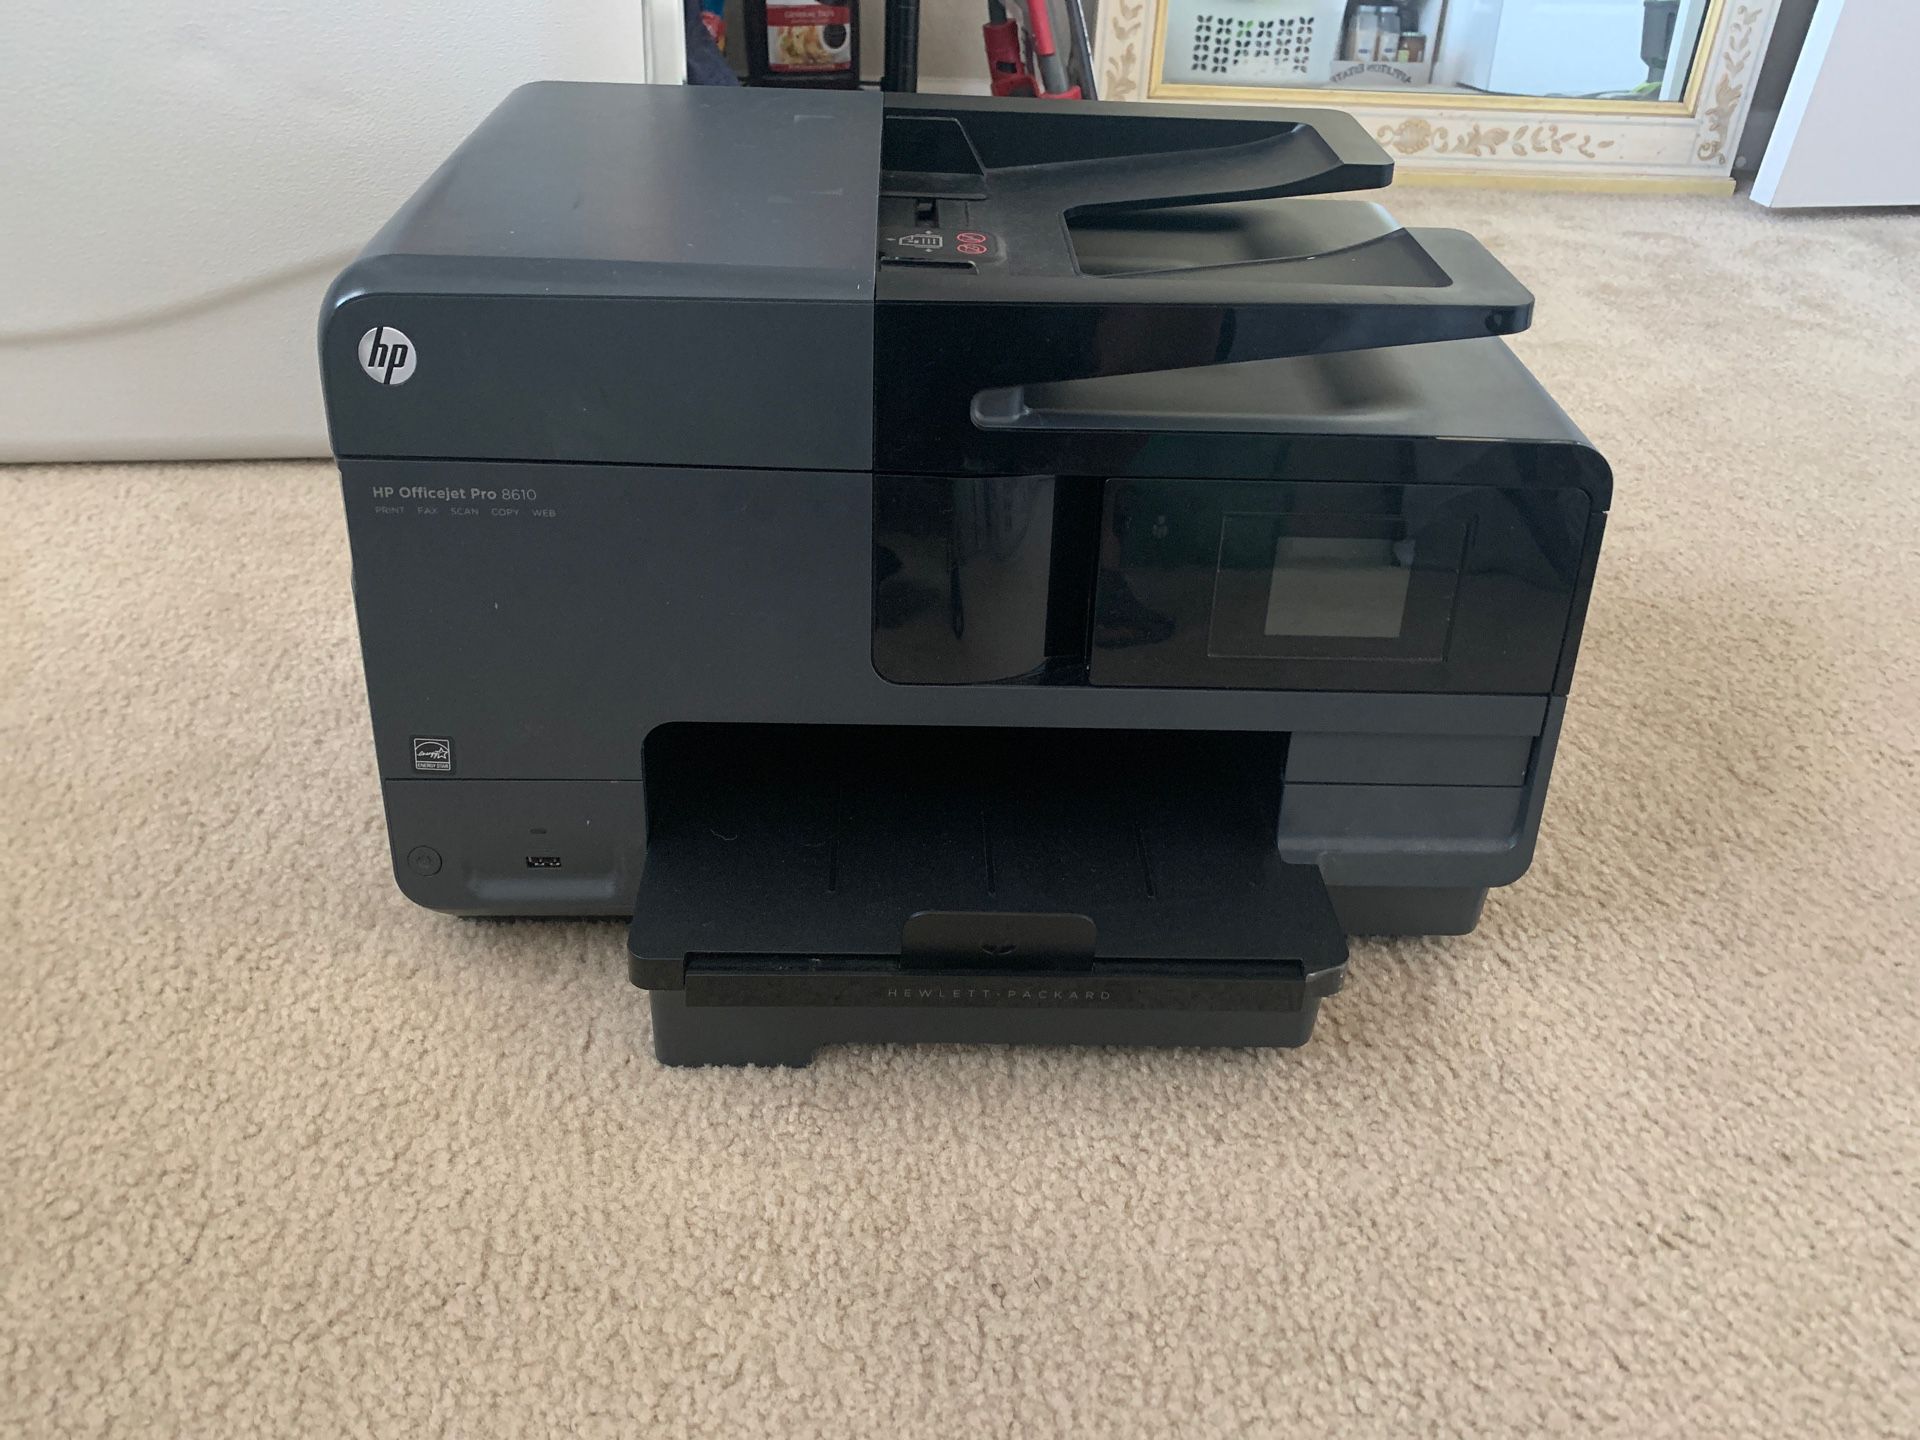 HP Office Jet printer 8610